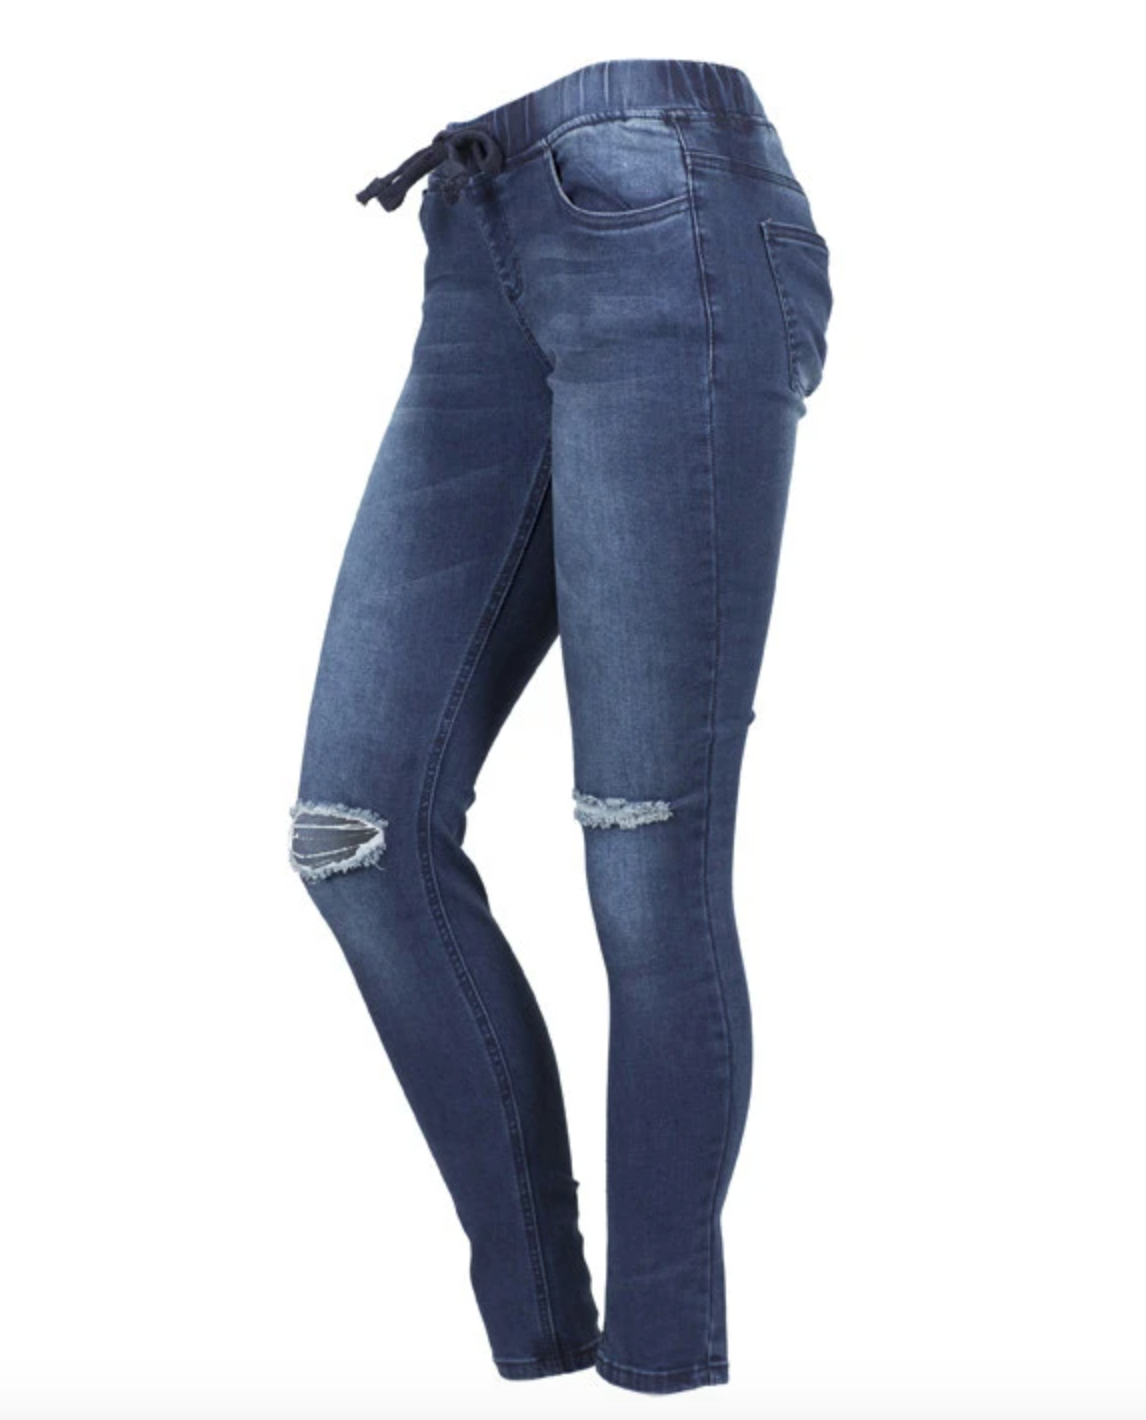 Nikki Lund-System Skinny Jeans